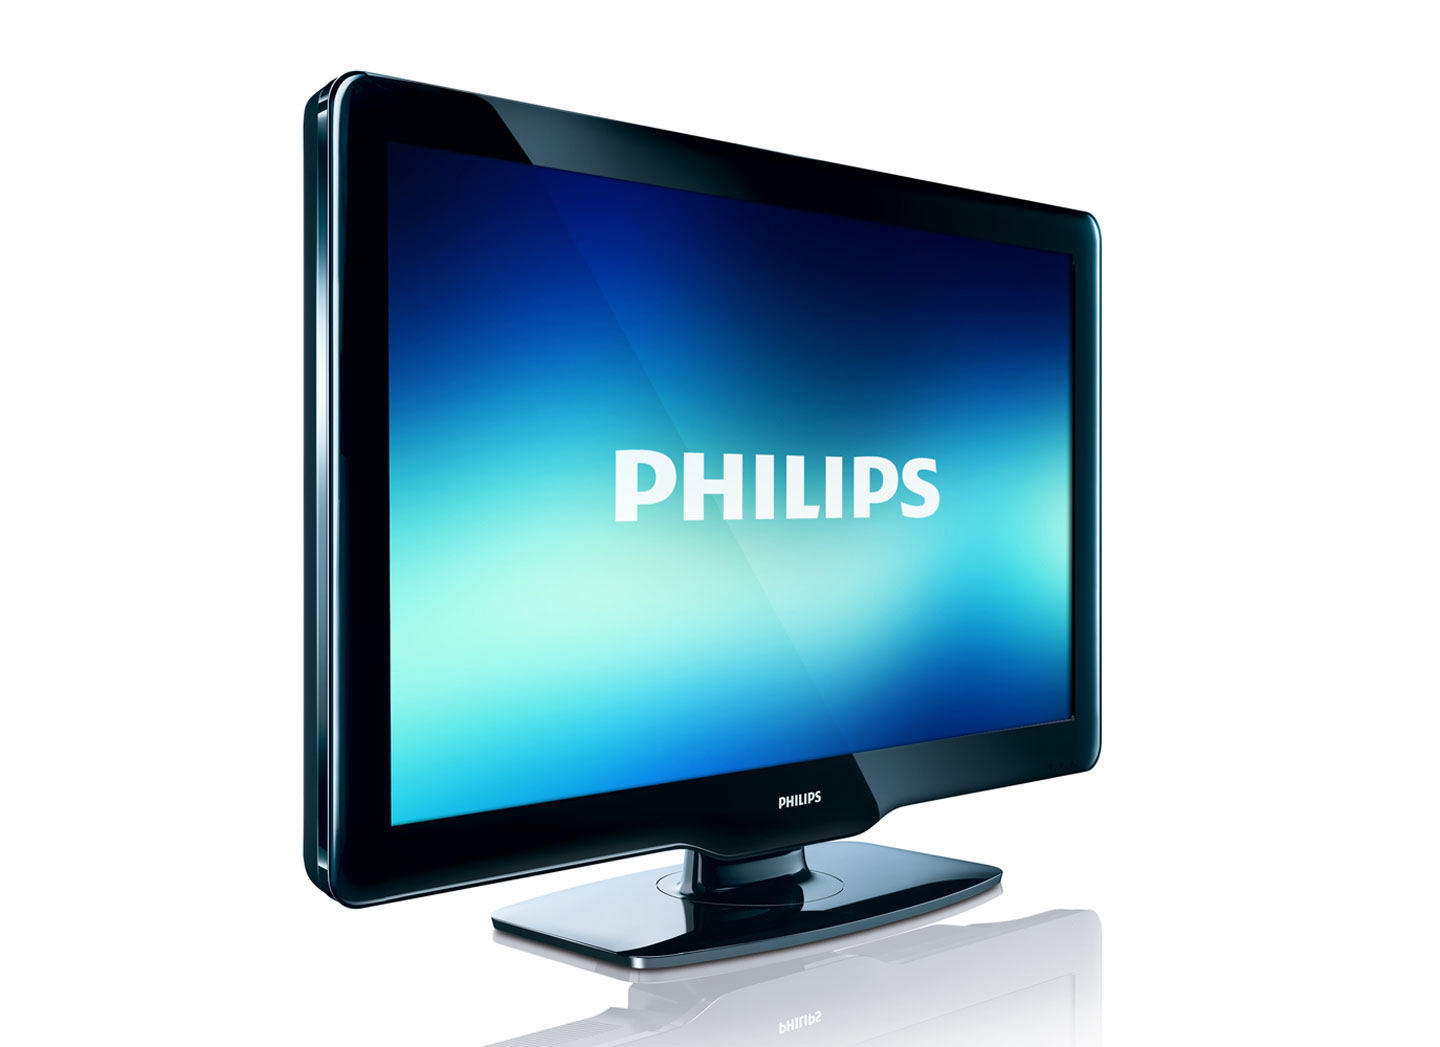 Филипс 32 pfl. Филипс 32pfl3605/60. Philips PFL 3605/60. Телевизор Philips 32pfl3605/60. Телевизор LCD Philips 32 PFL 3605/60.